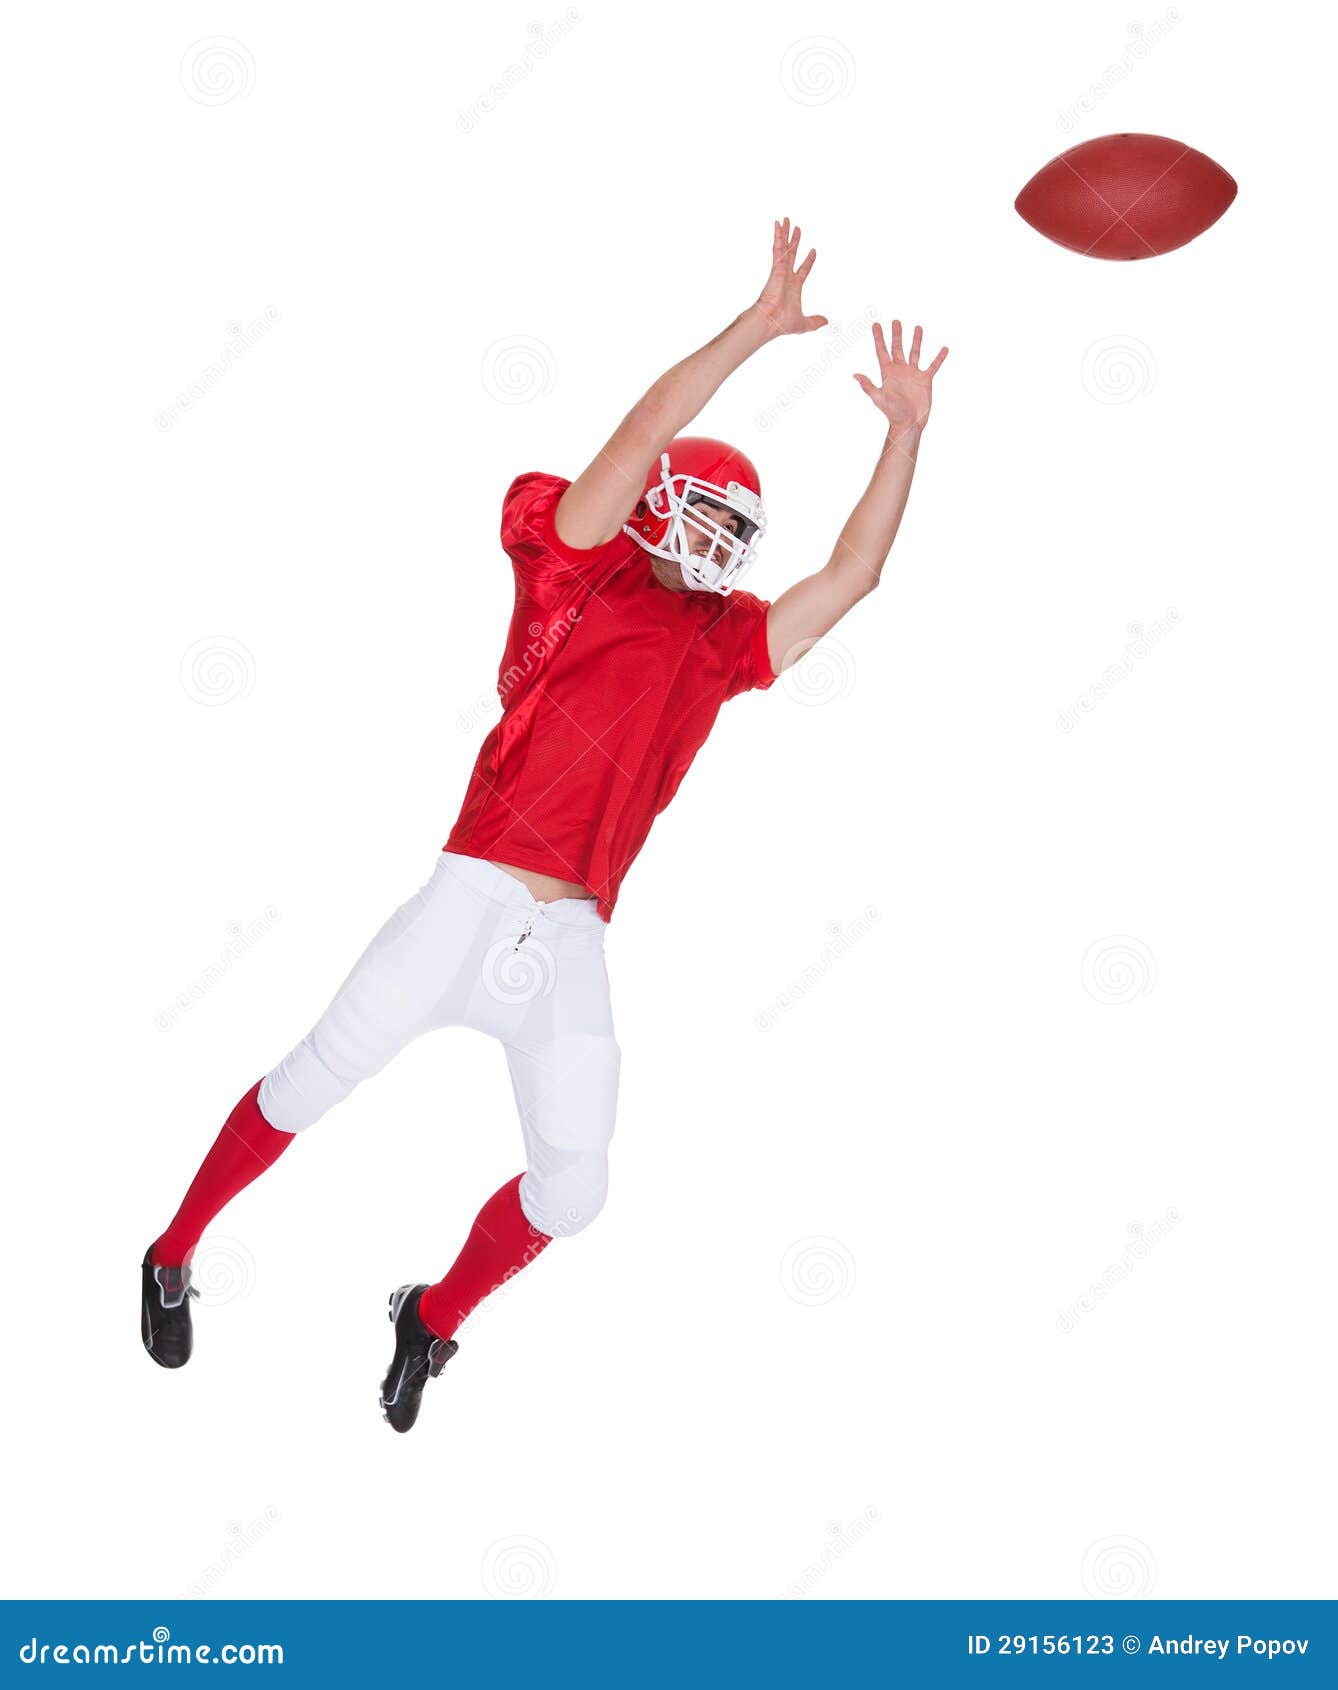 american football player catching ball